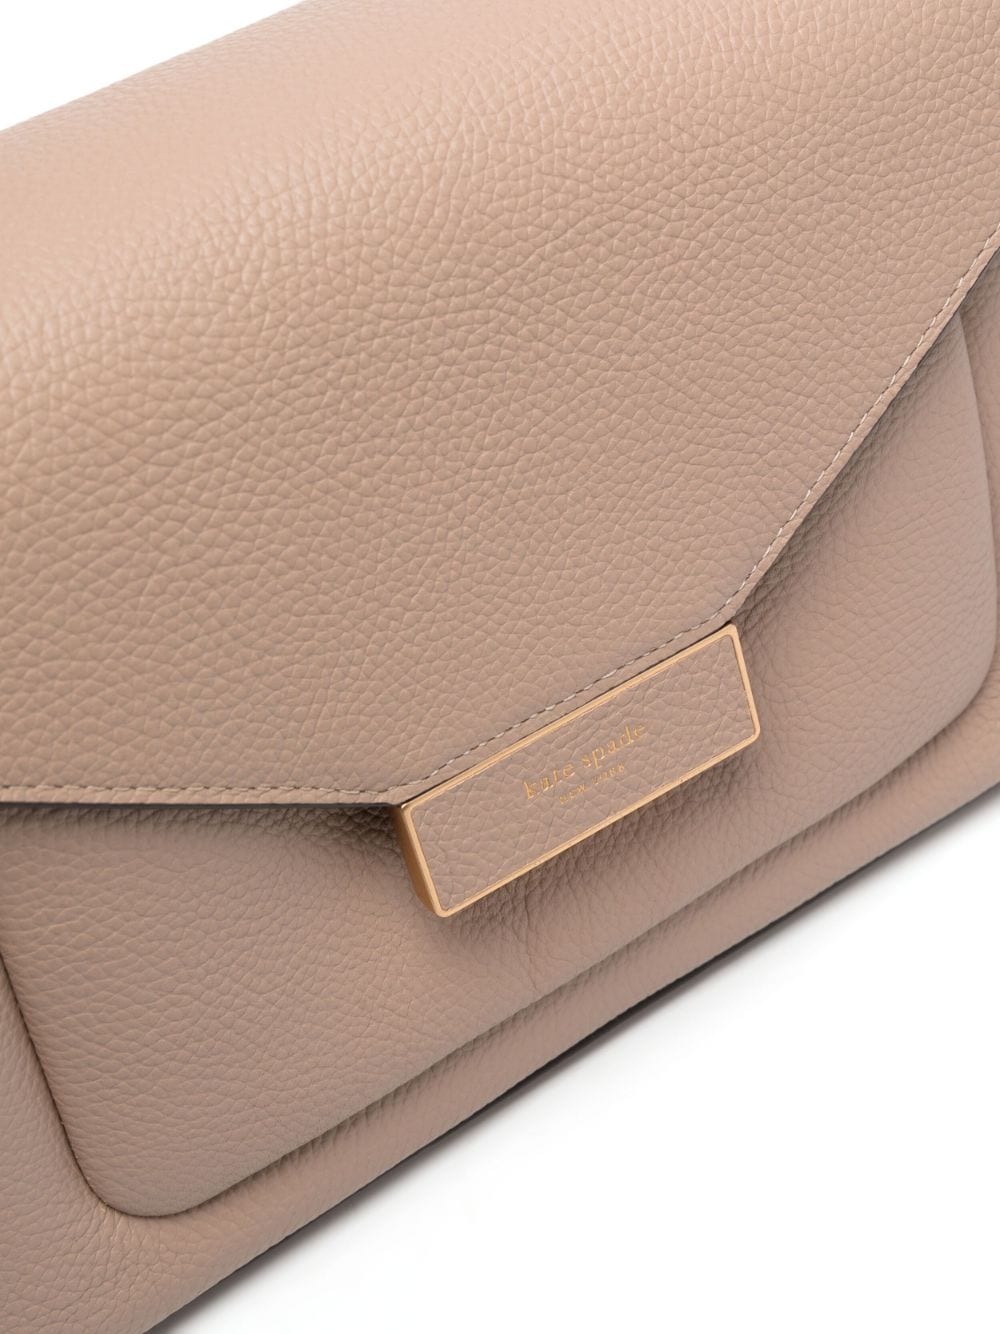 Shop Kate Spade Medium Gramercy Shoulder Bag In Brown